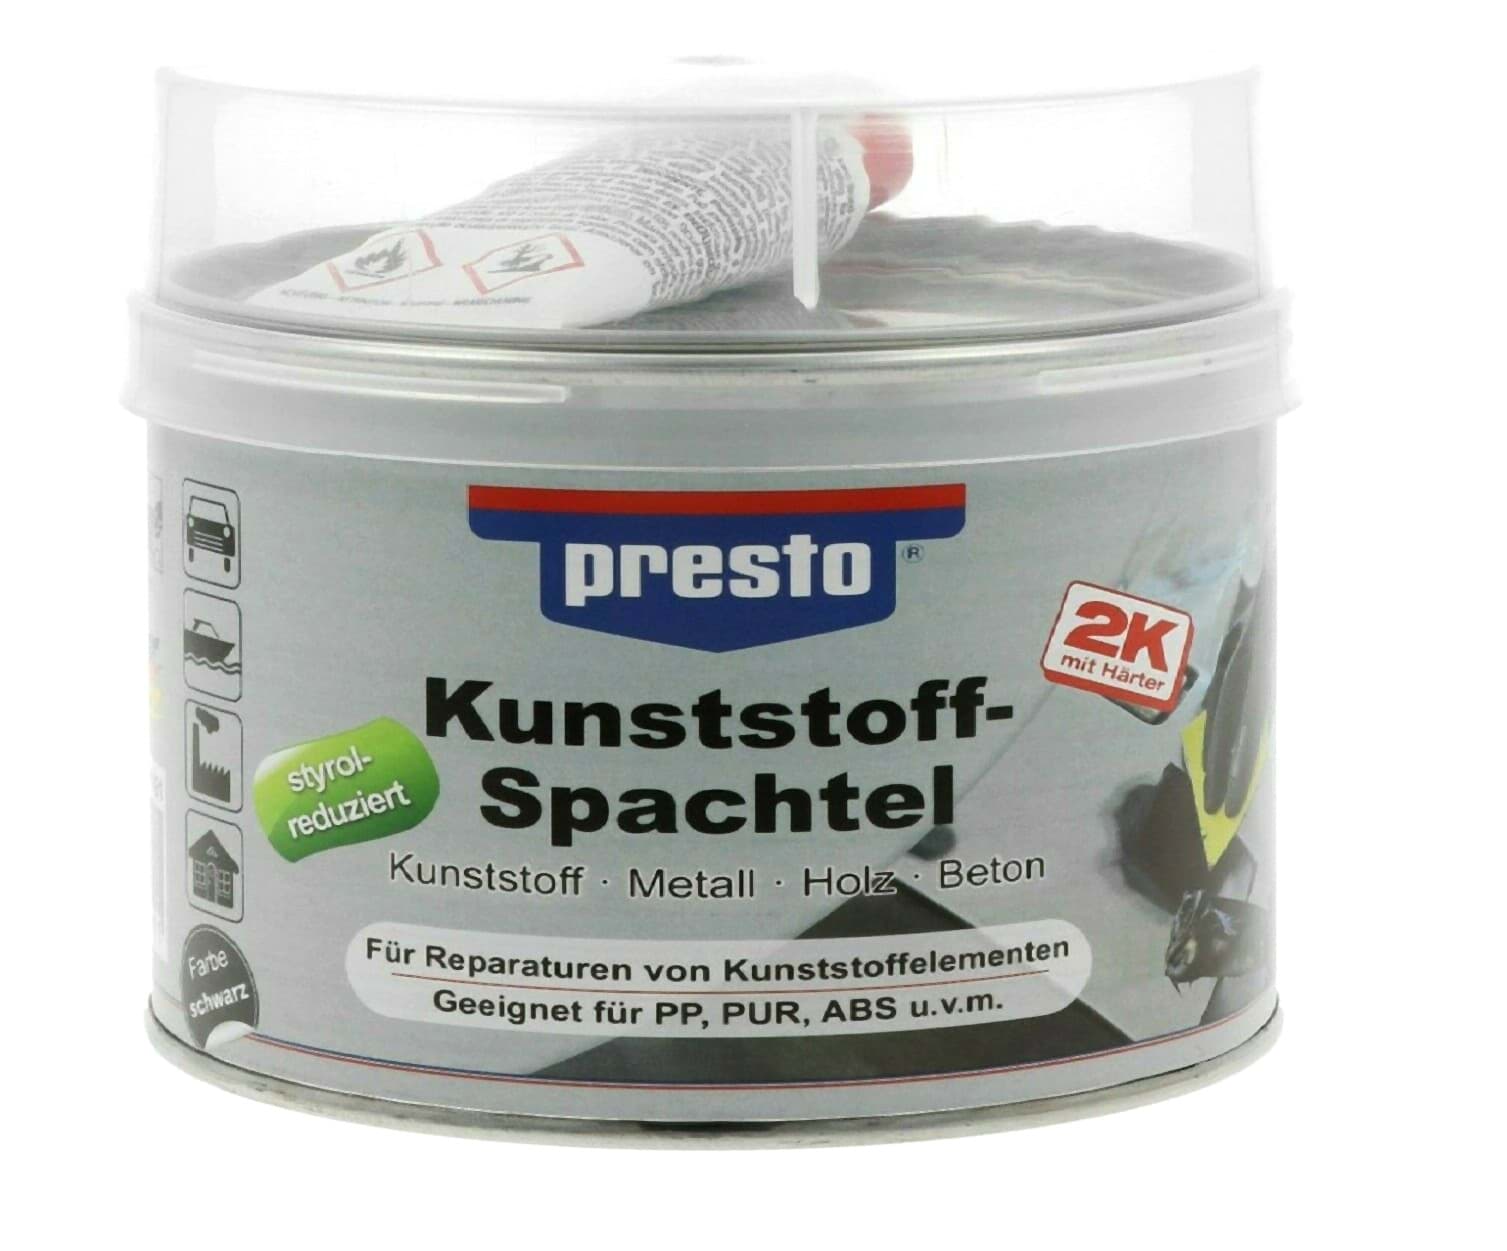 Изображение Presto Kunststoffspachtel Kunststoff Spachtel Prestolith elastic 1kg